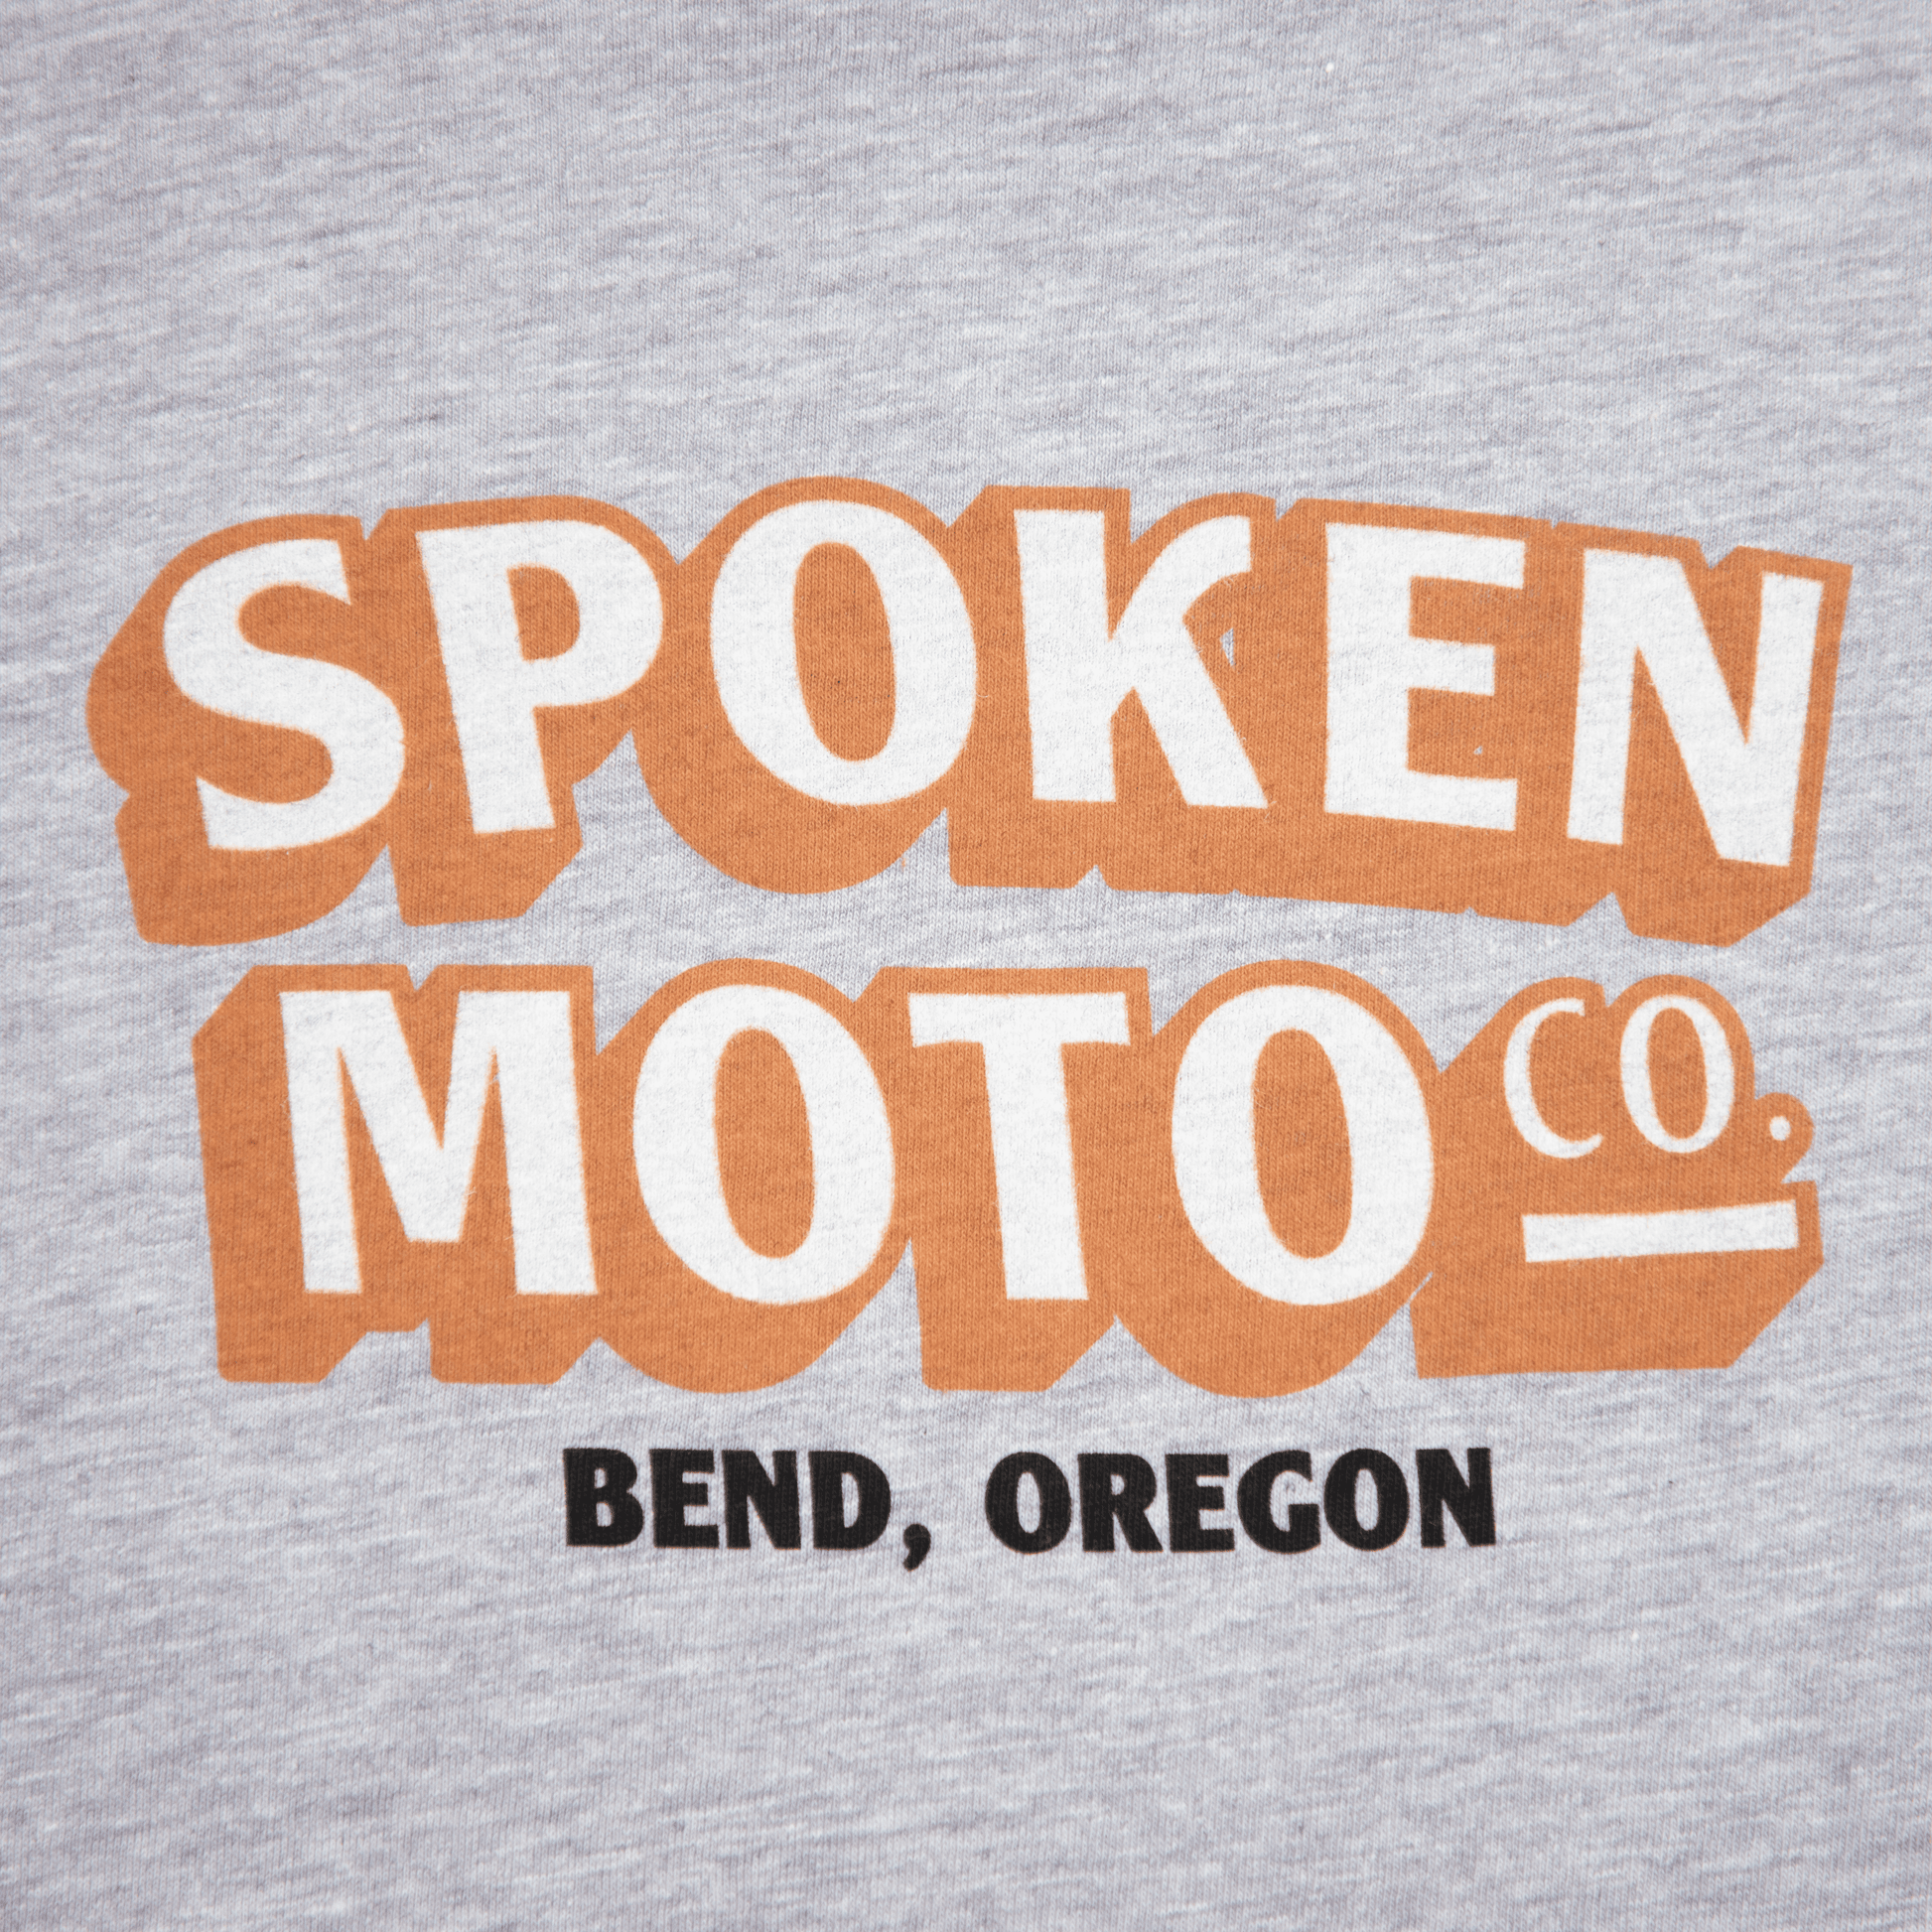 Close up of orange and white Spoken Moto Co. logo with Bend, Oregon.